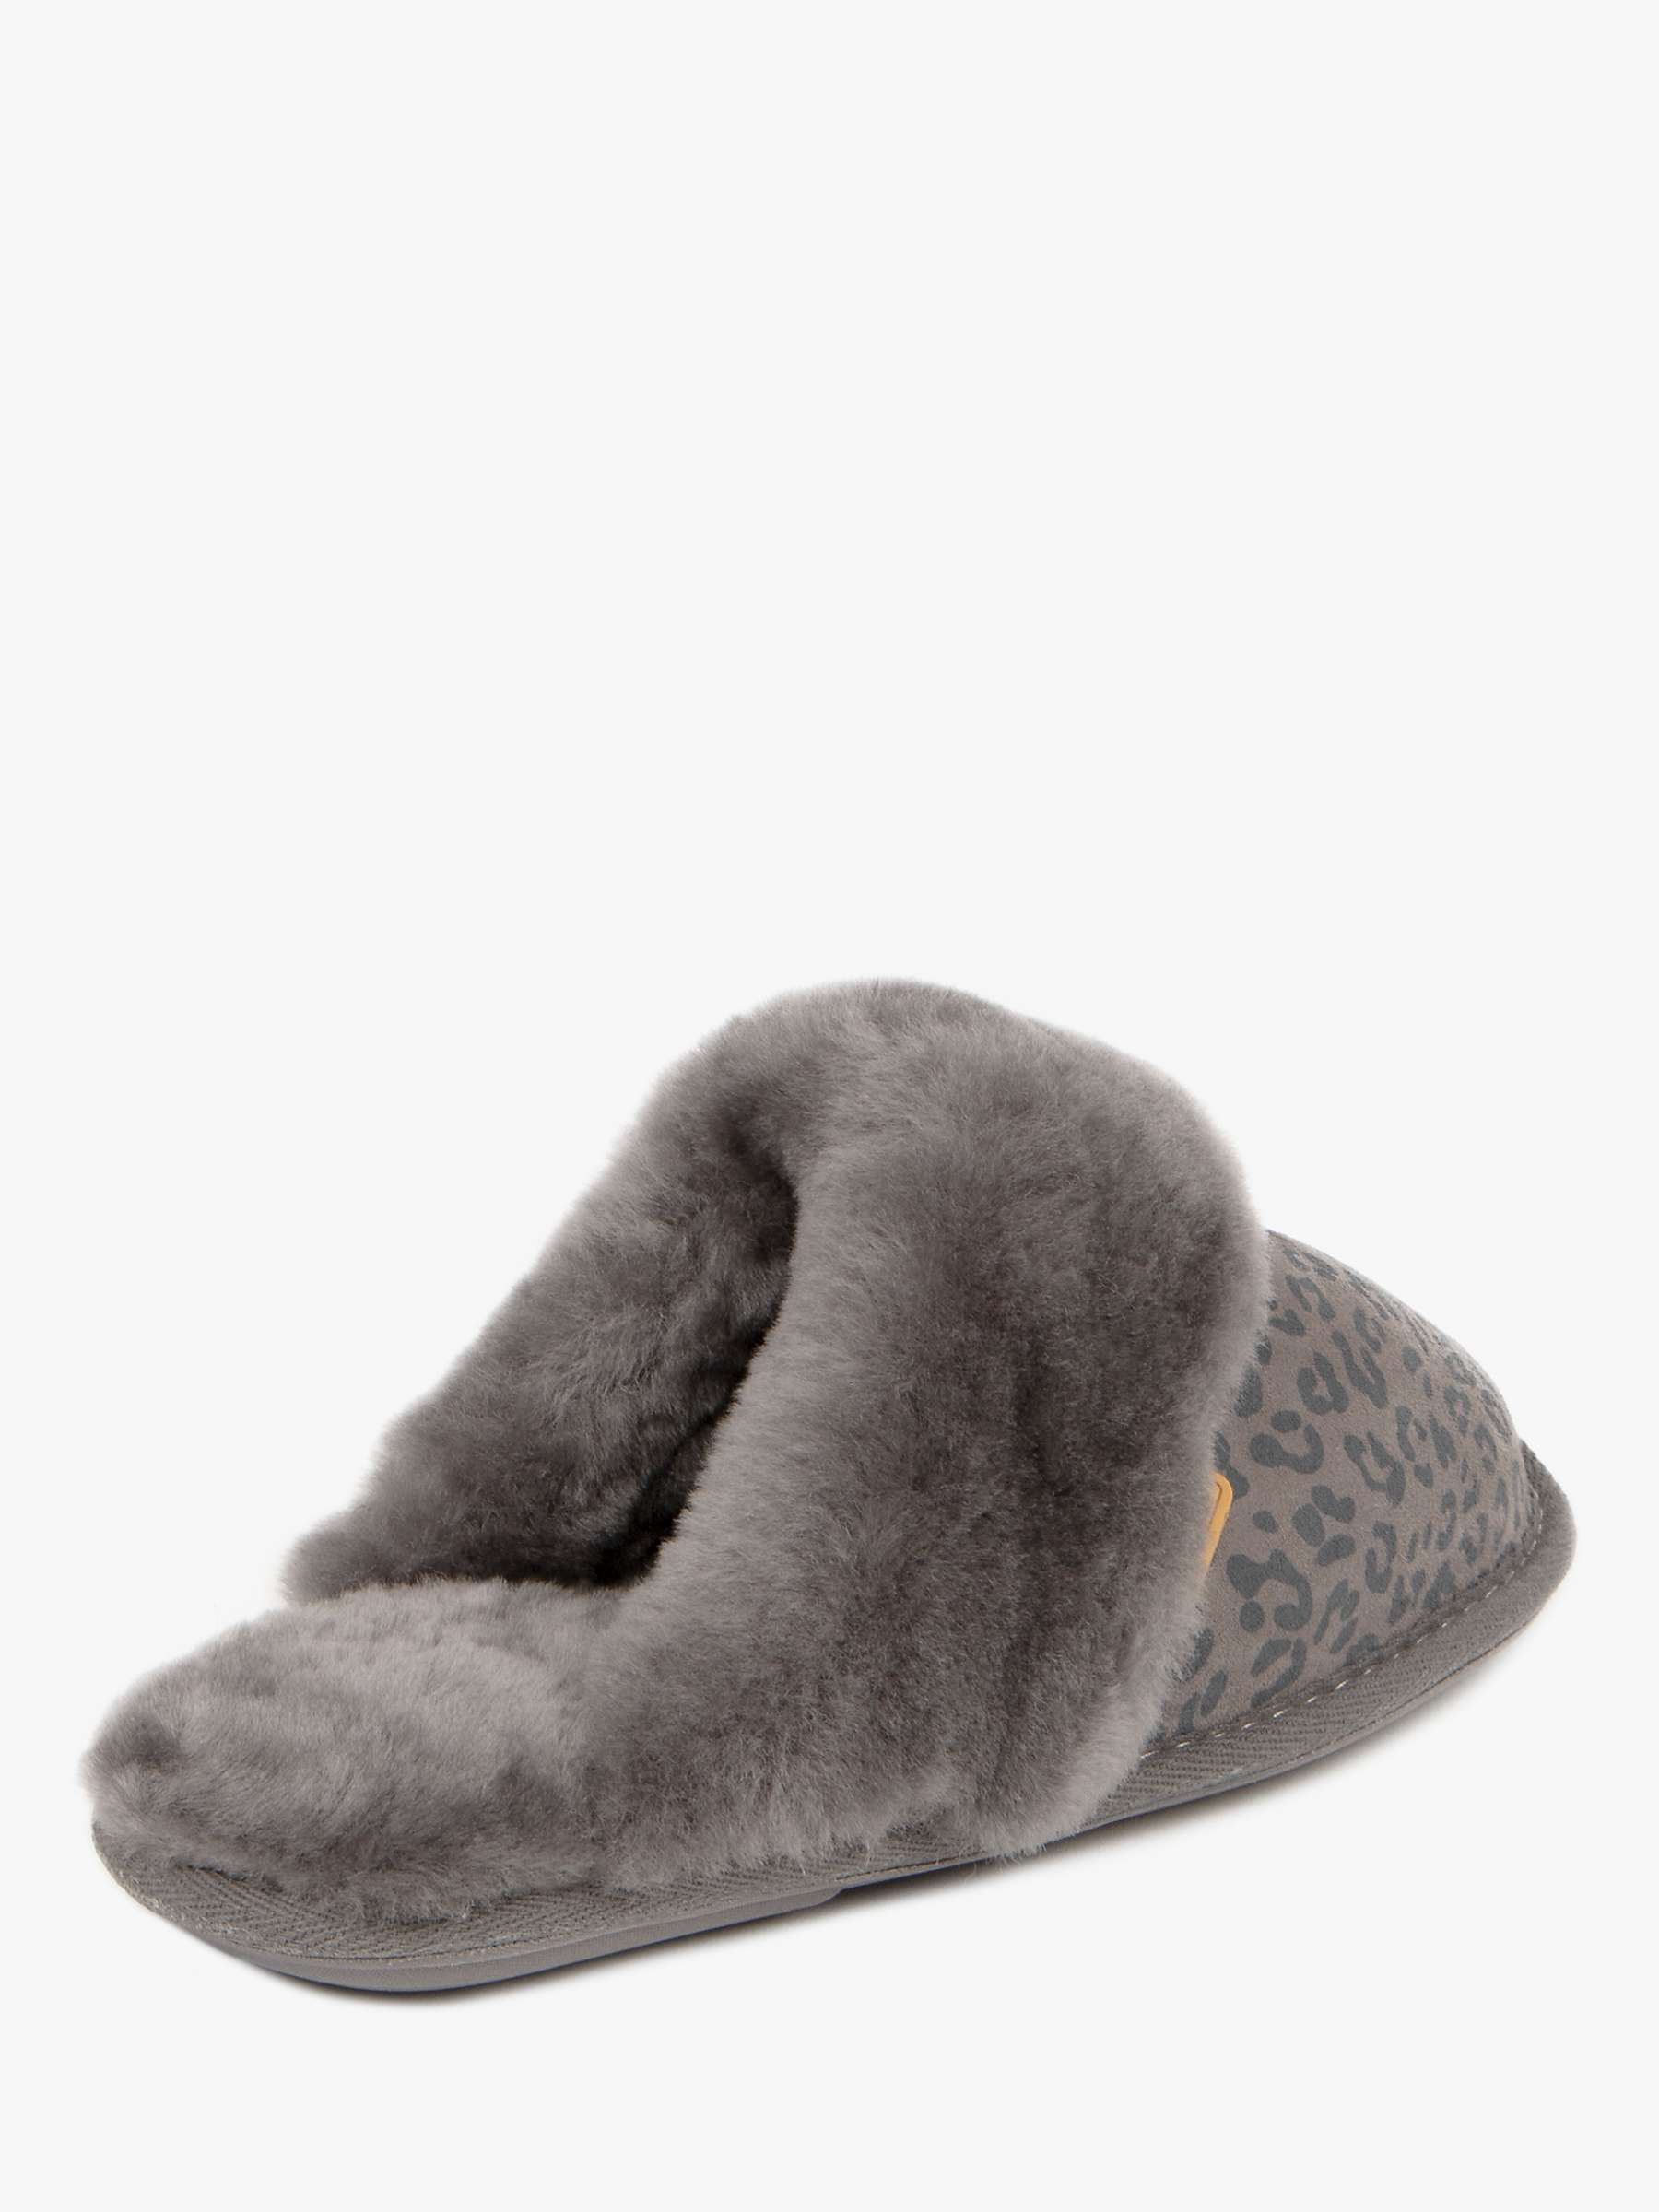 Buy Just Sheepskin Duchess Animal Print Suede Mule Slippers Online at johnlewis.com